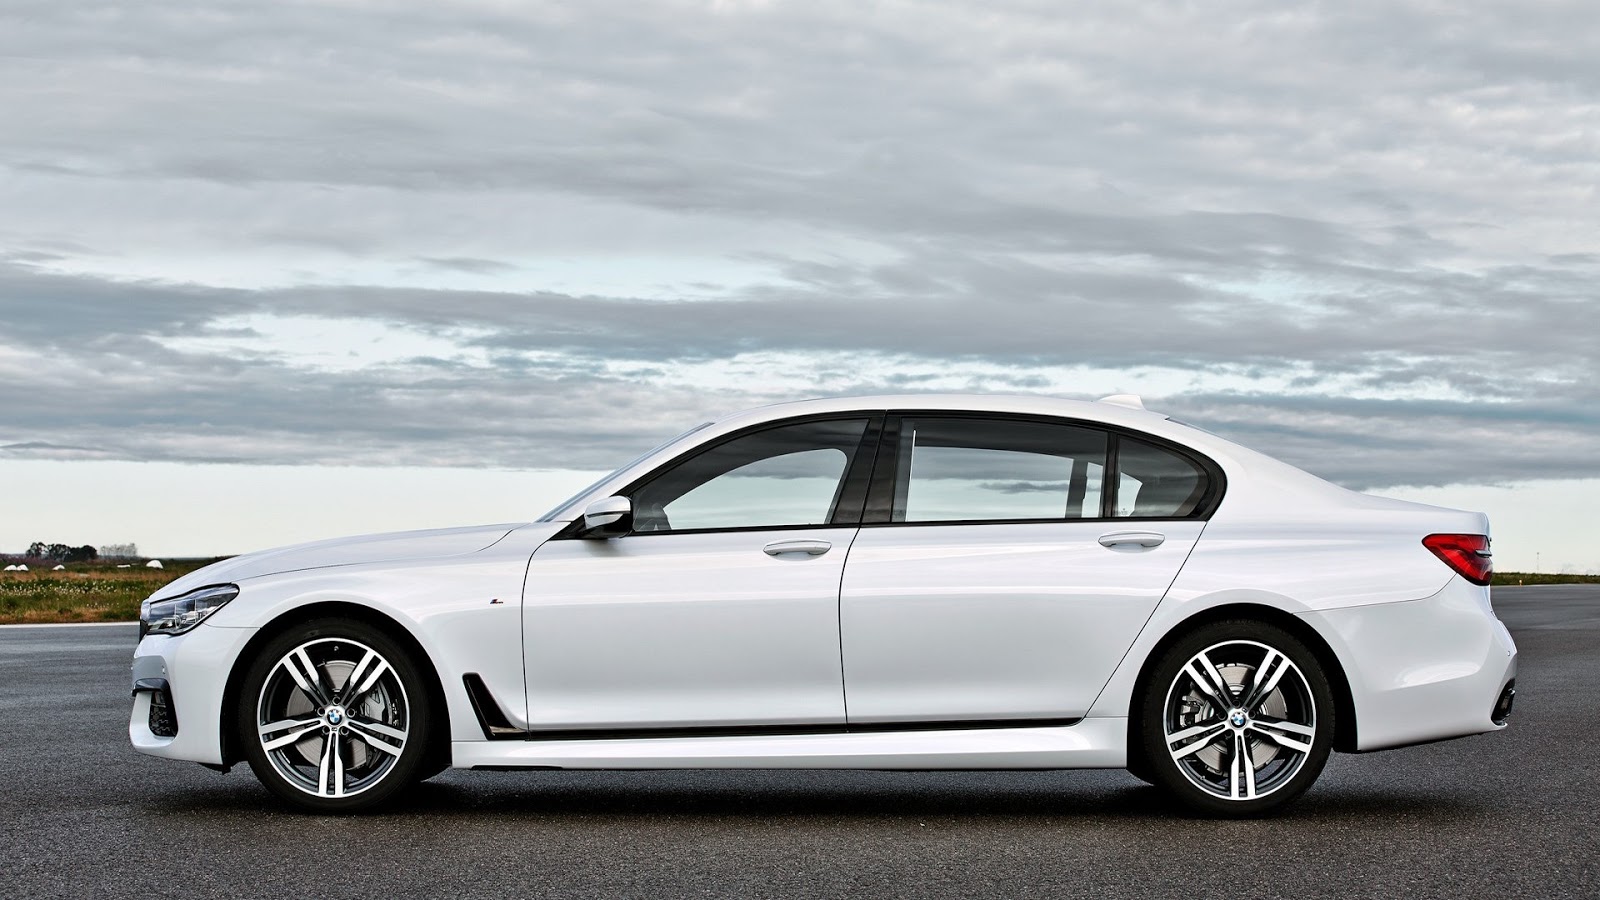 BMW 7serisi 2016 model araba resimleri rooteto5